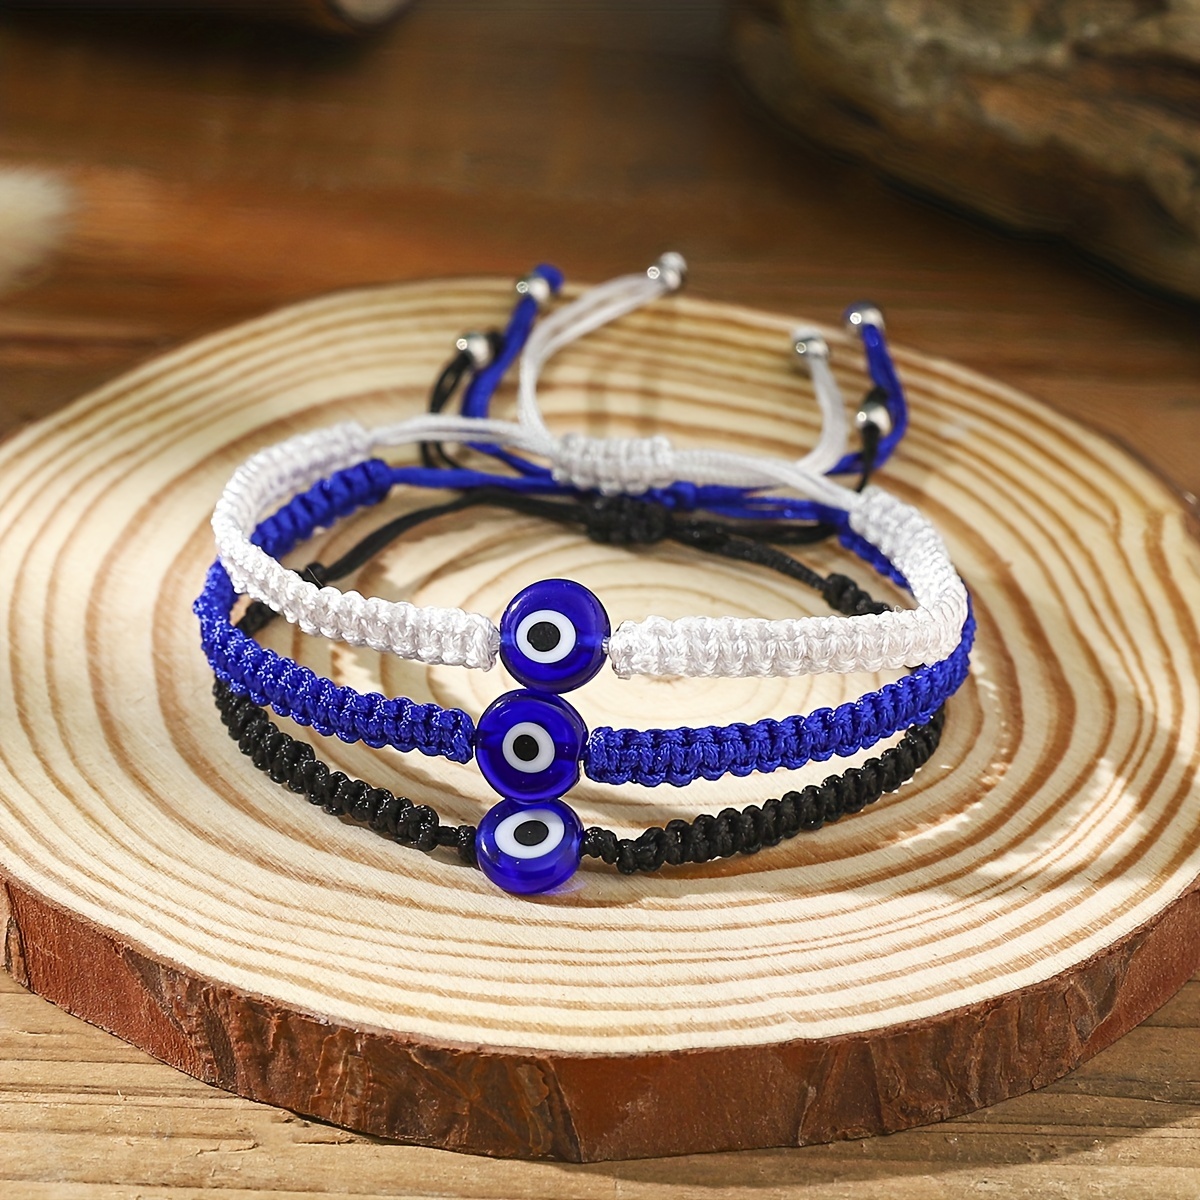 

Blue Evil Eye Eye Charm With Red Rope Handmade Braided Adjustable Knot Bracelet Unisex Hand Decoration For Women Men